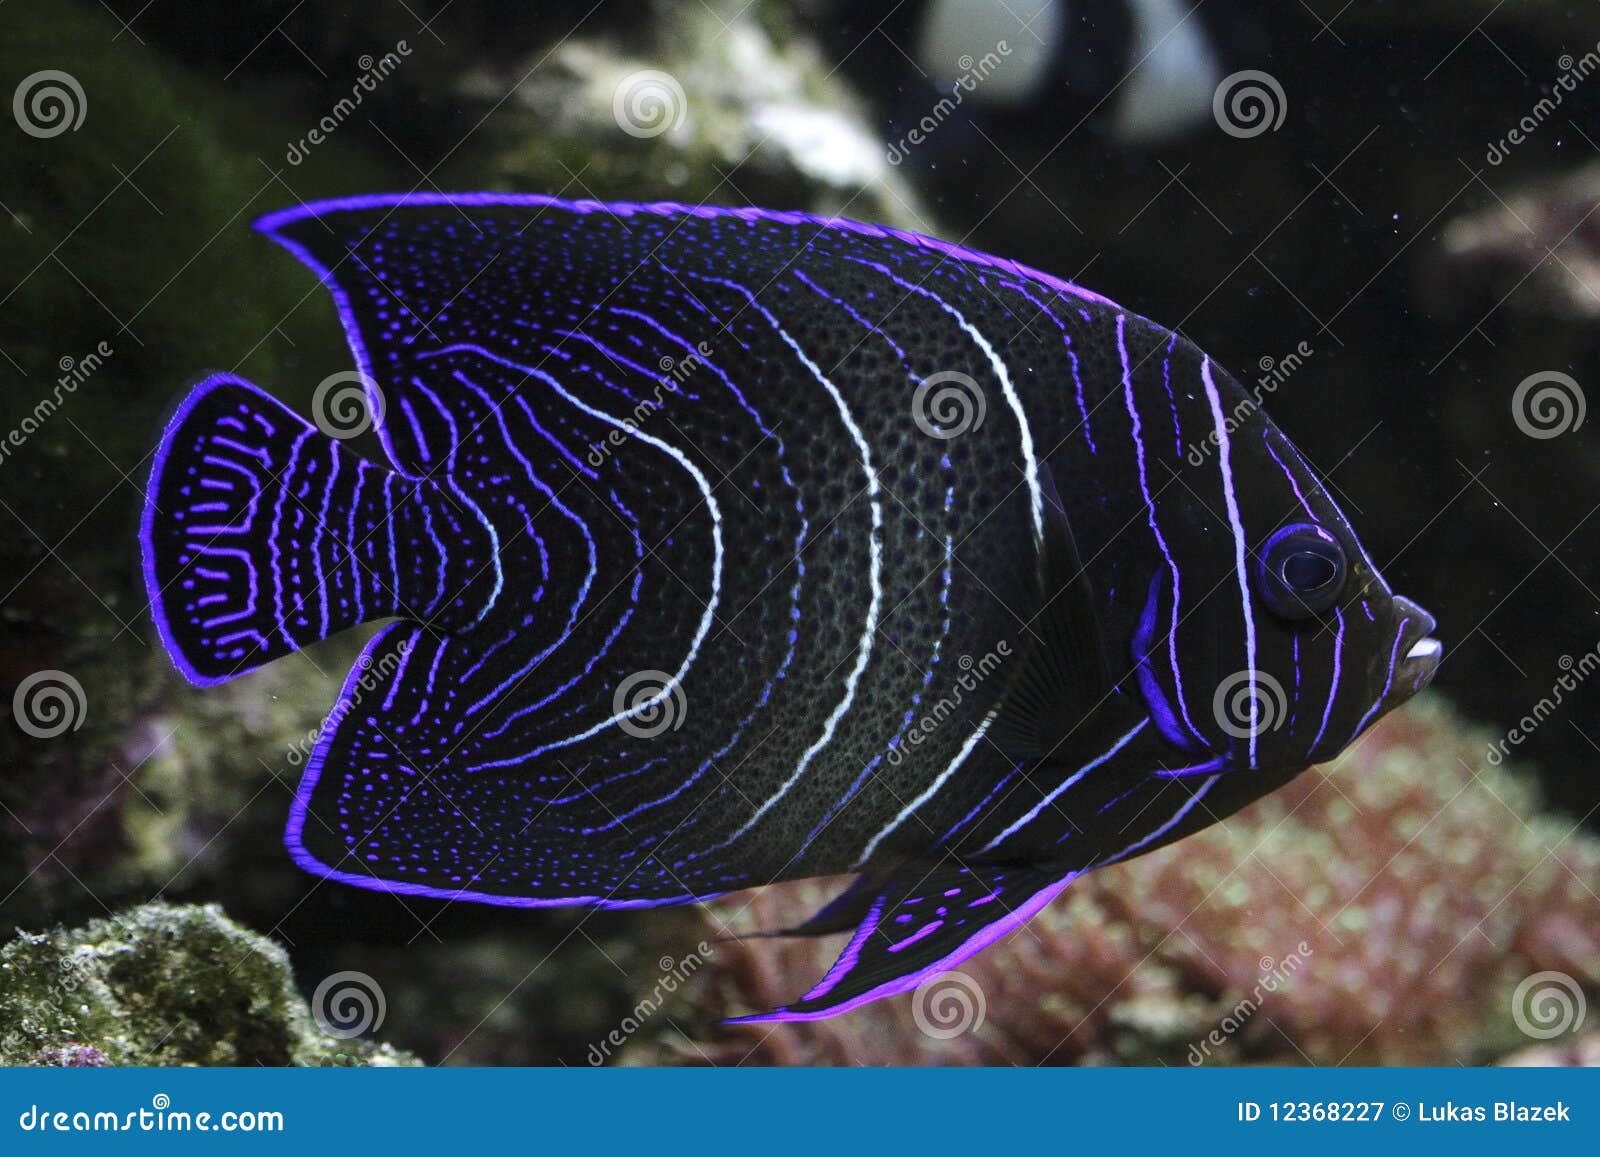 koran angelfish